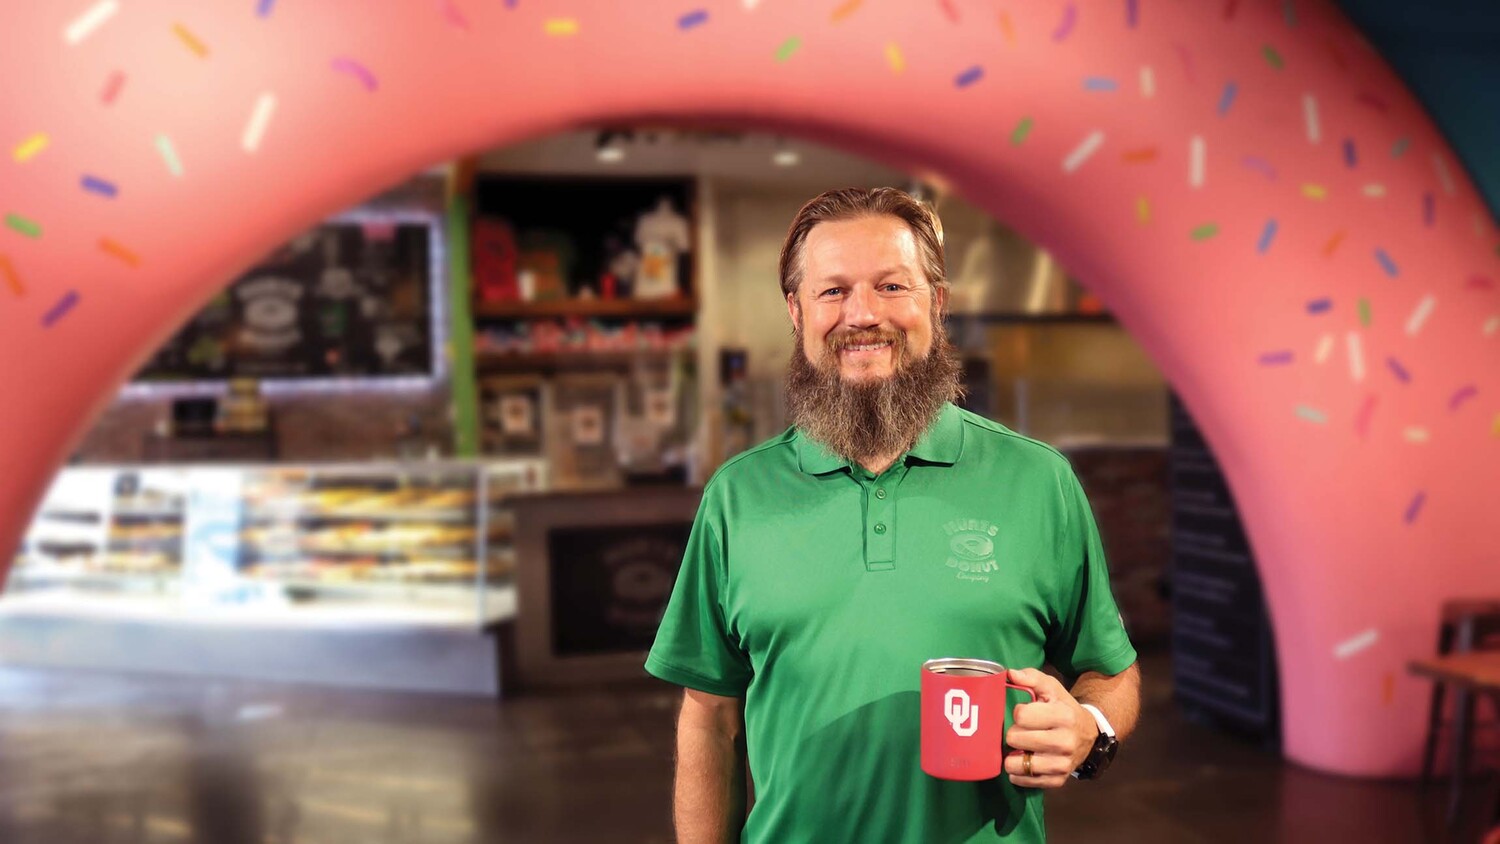 Hurts Donut Company founder Tim Clegg